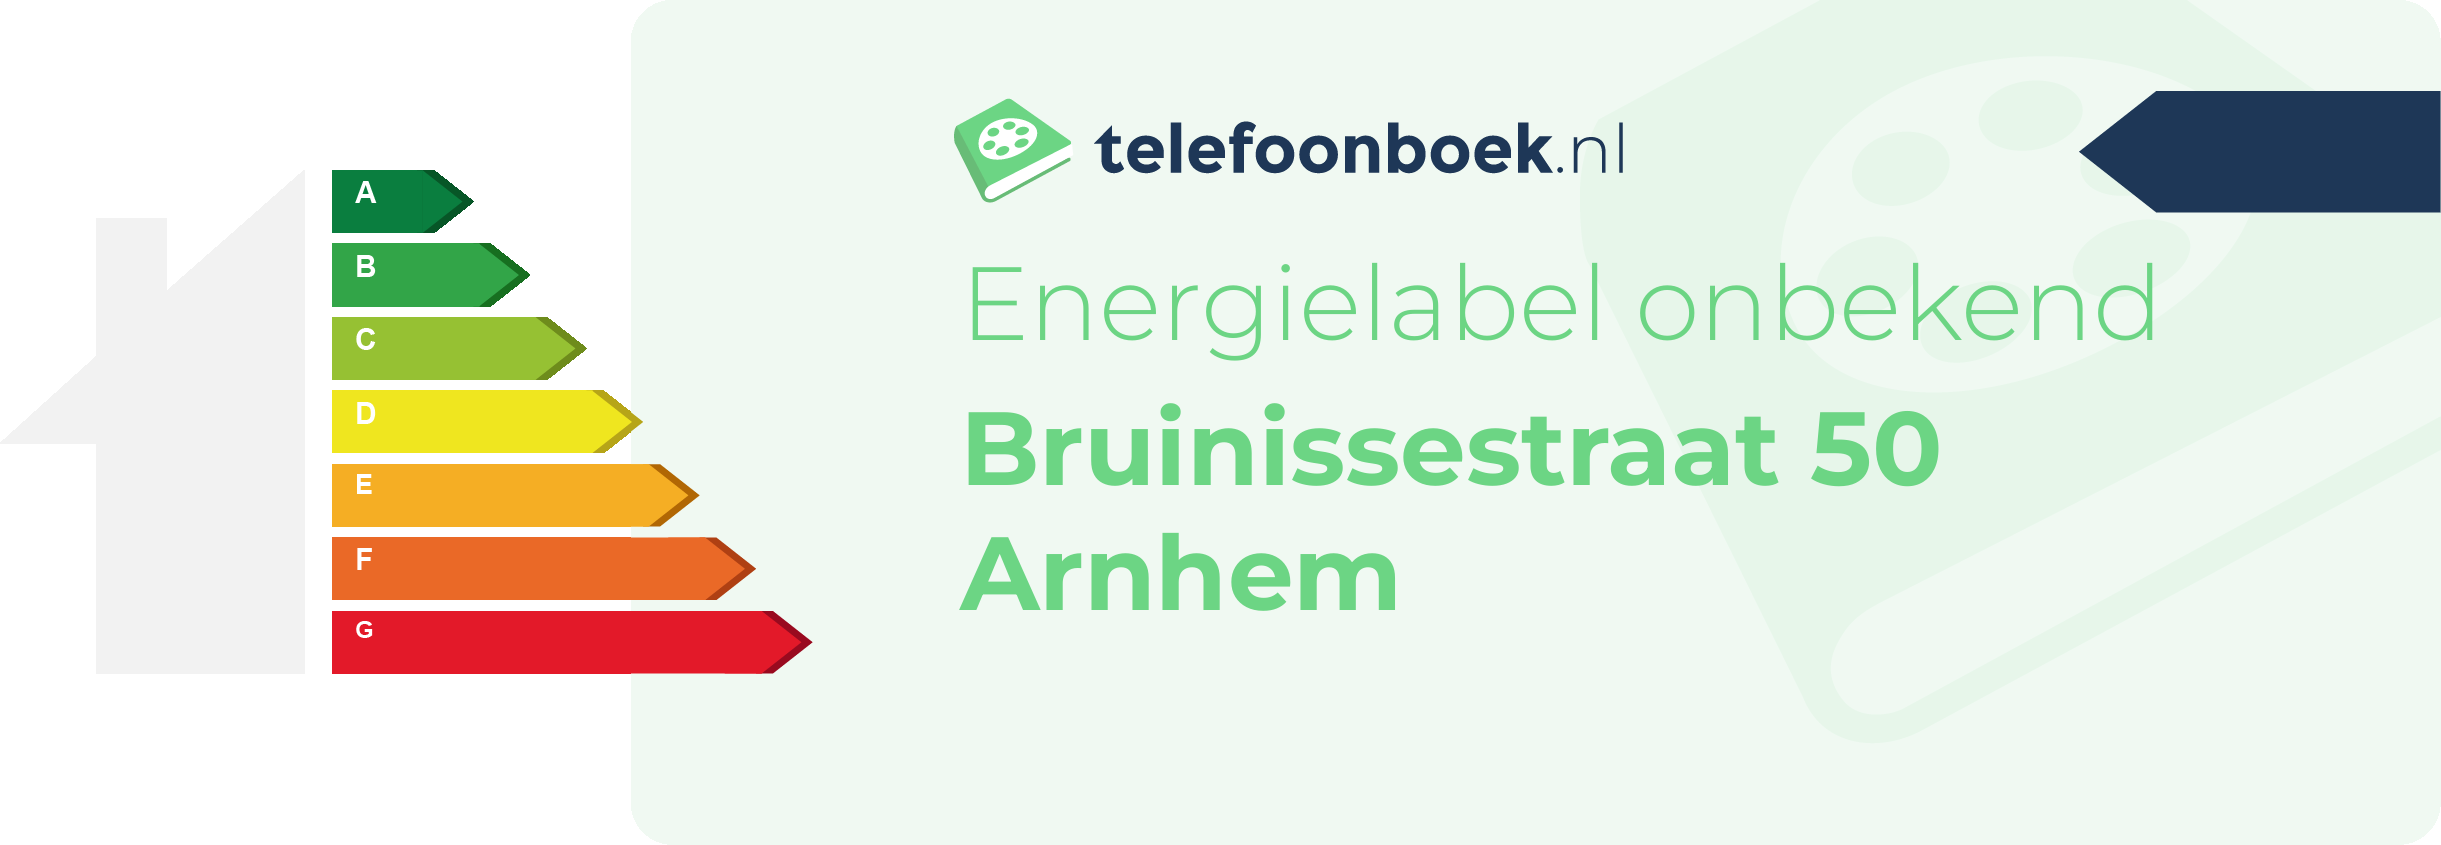 Energielabel Bruinissestraat 50 Arnhem